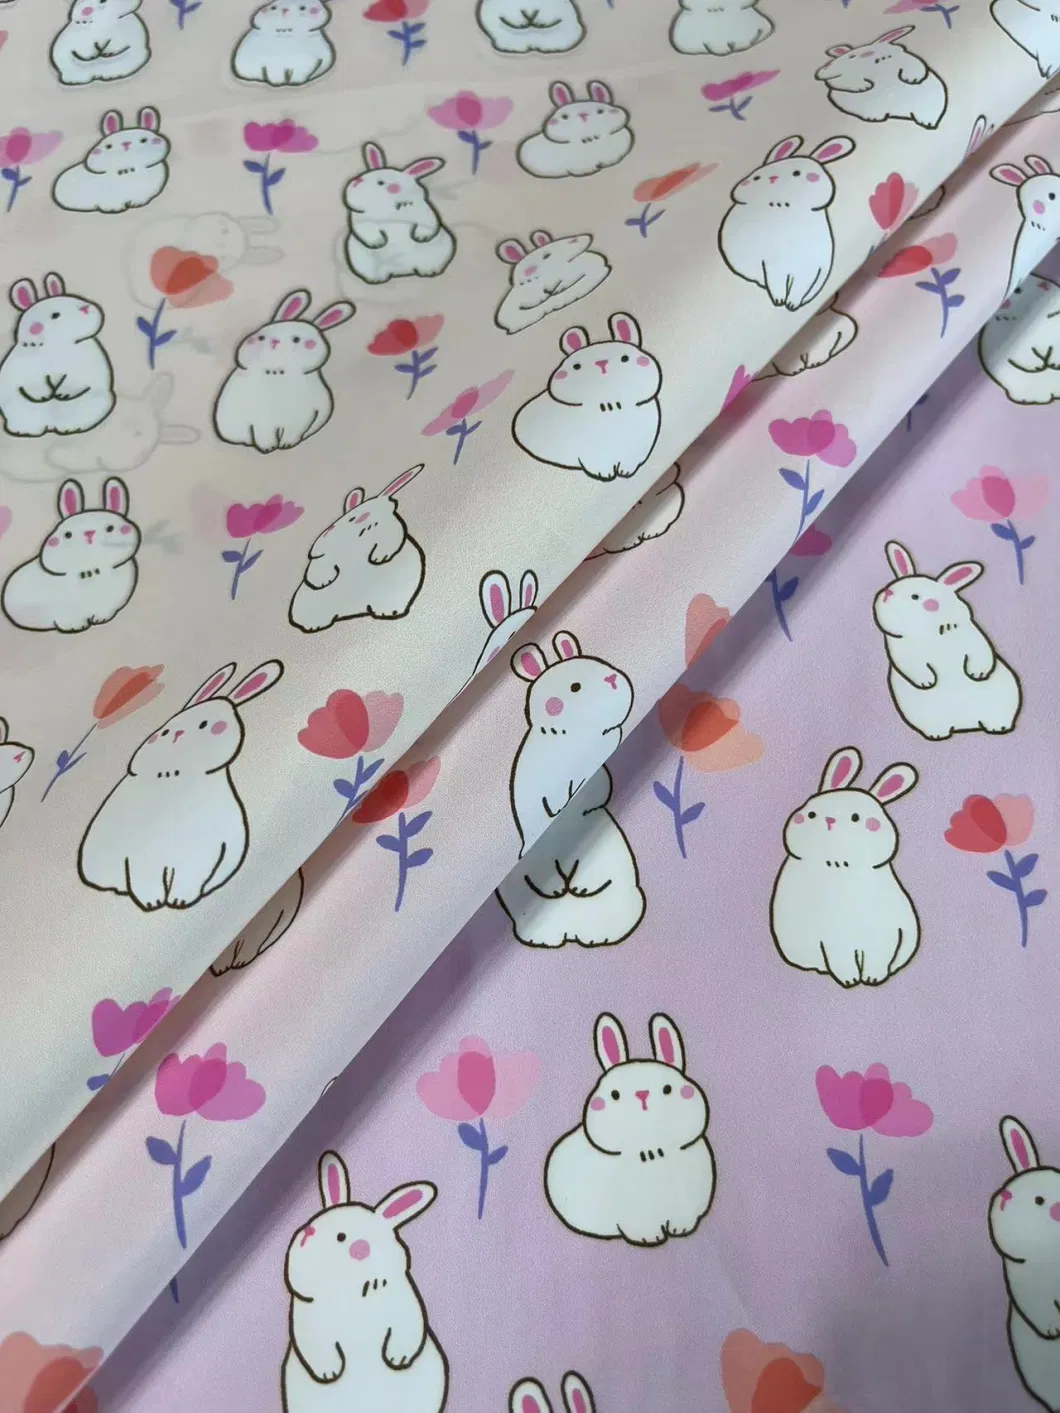 The Flower Patterns Rabbits Digital Printed Polyester Taffta Fabric